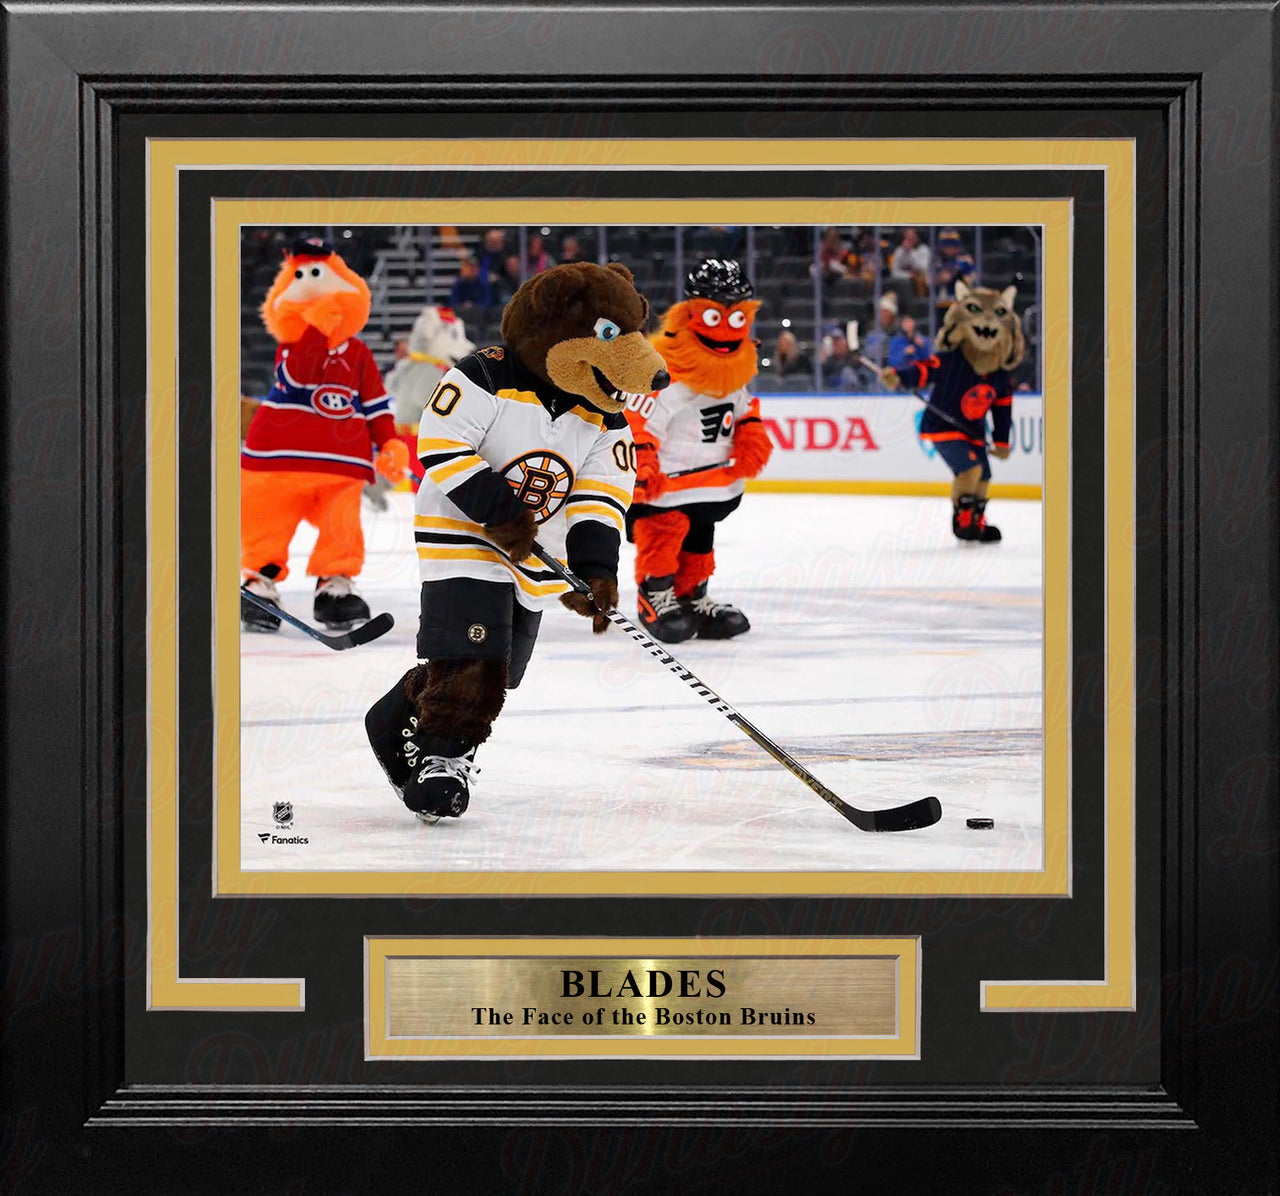 Blades Skating on the Ice Boston Bruins 8" x 10" Framed Mascot Photo - Dynasty Sports & Framing 